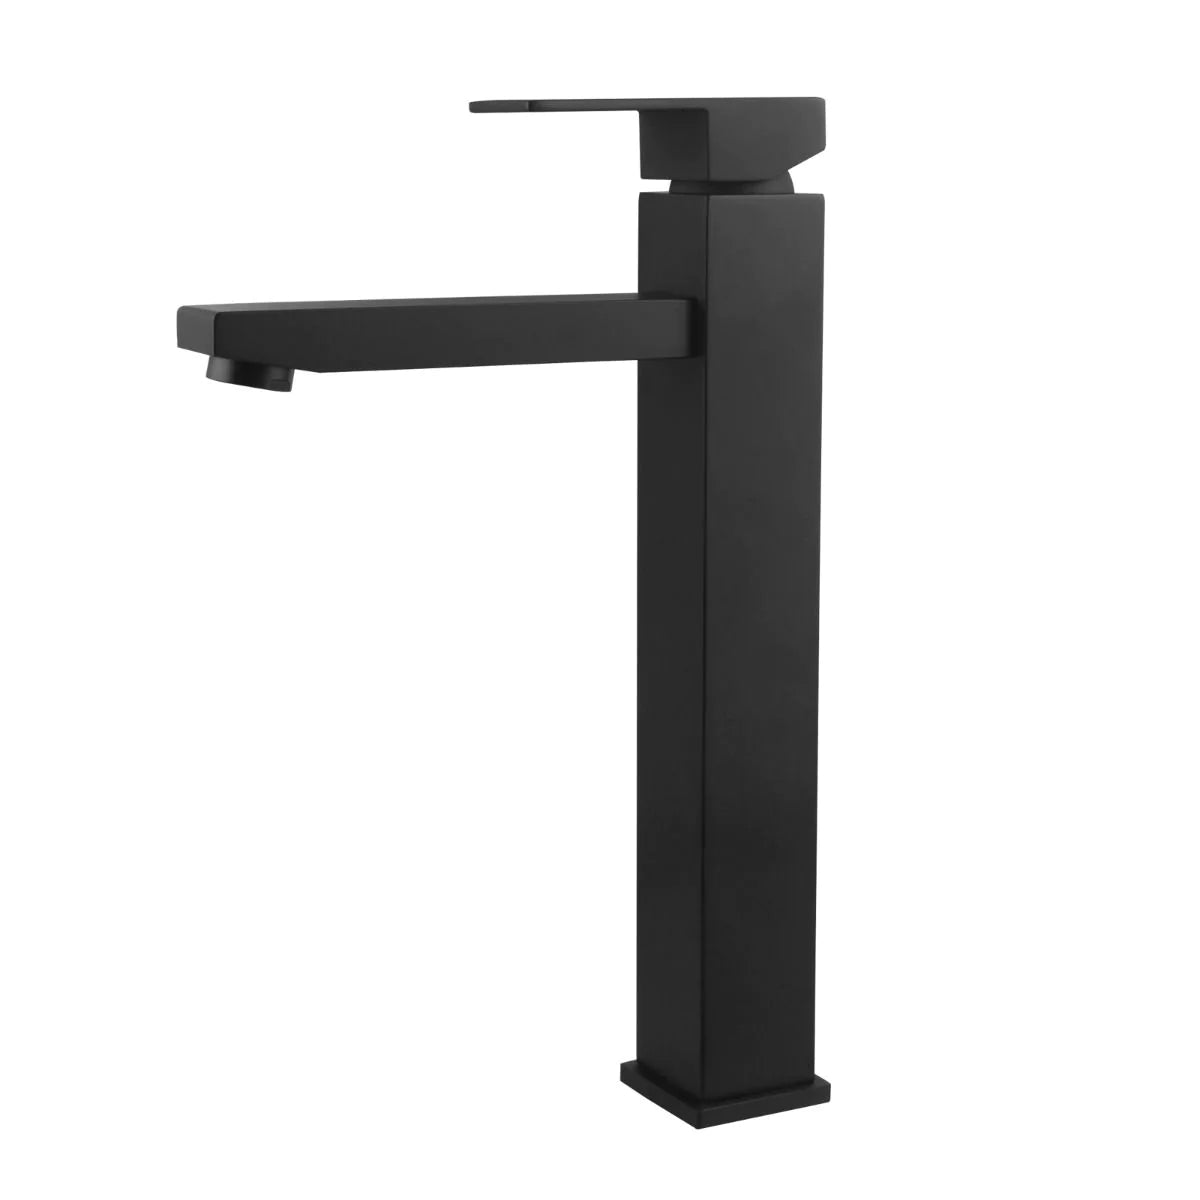 Blaze Tall Basin Mixer: Modern Faucet with Sleek Design and Functionality-Black-OX0119_BM